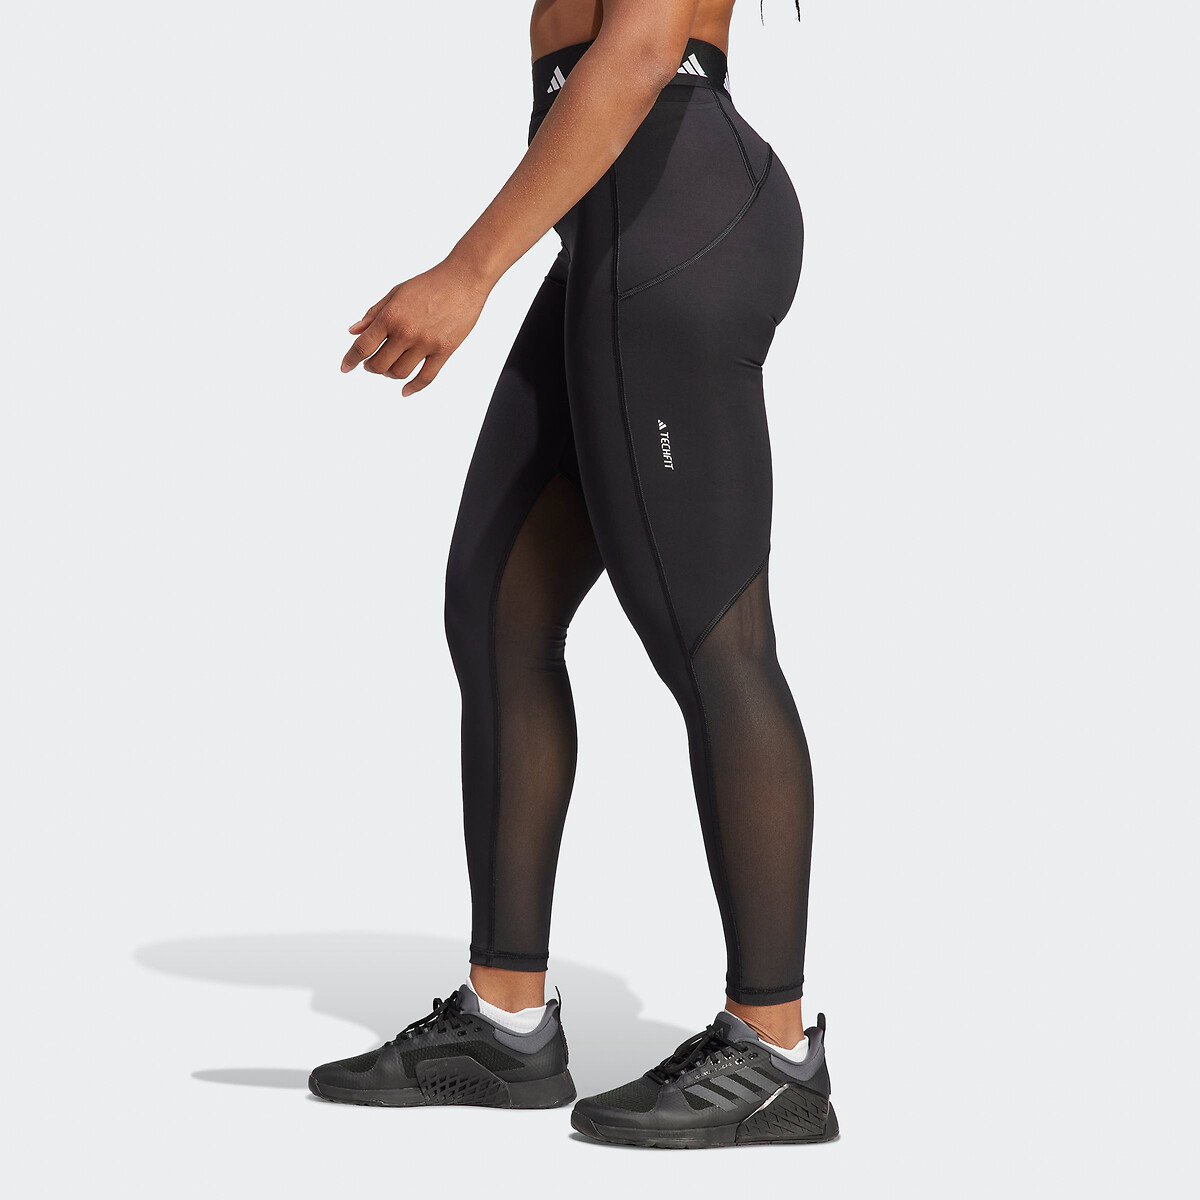 Techfit gym leggings, black, Adidas Performance